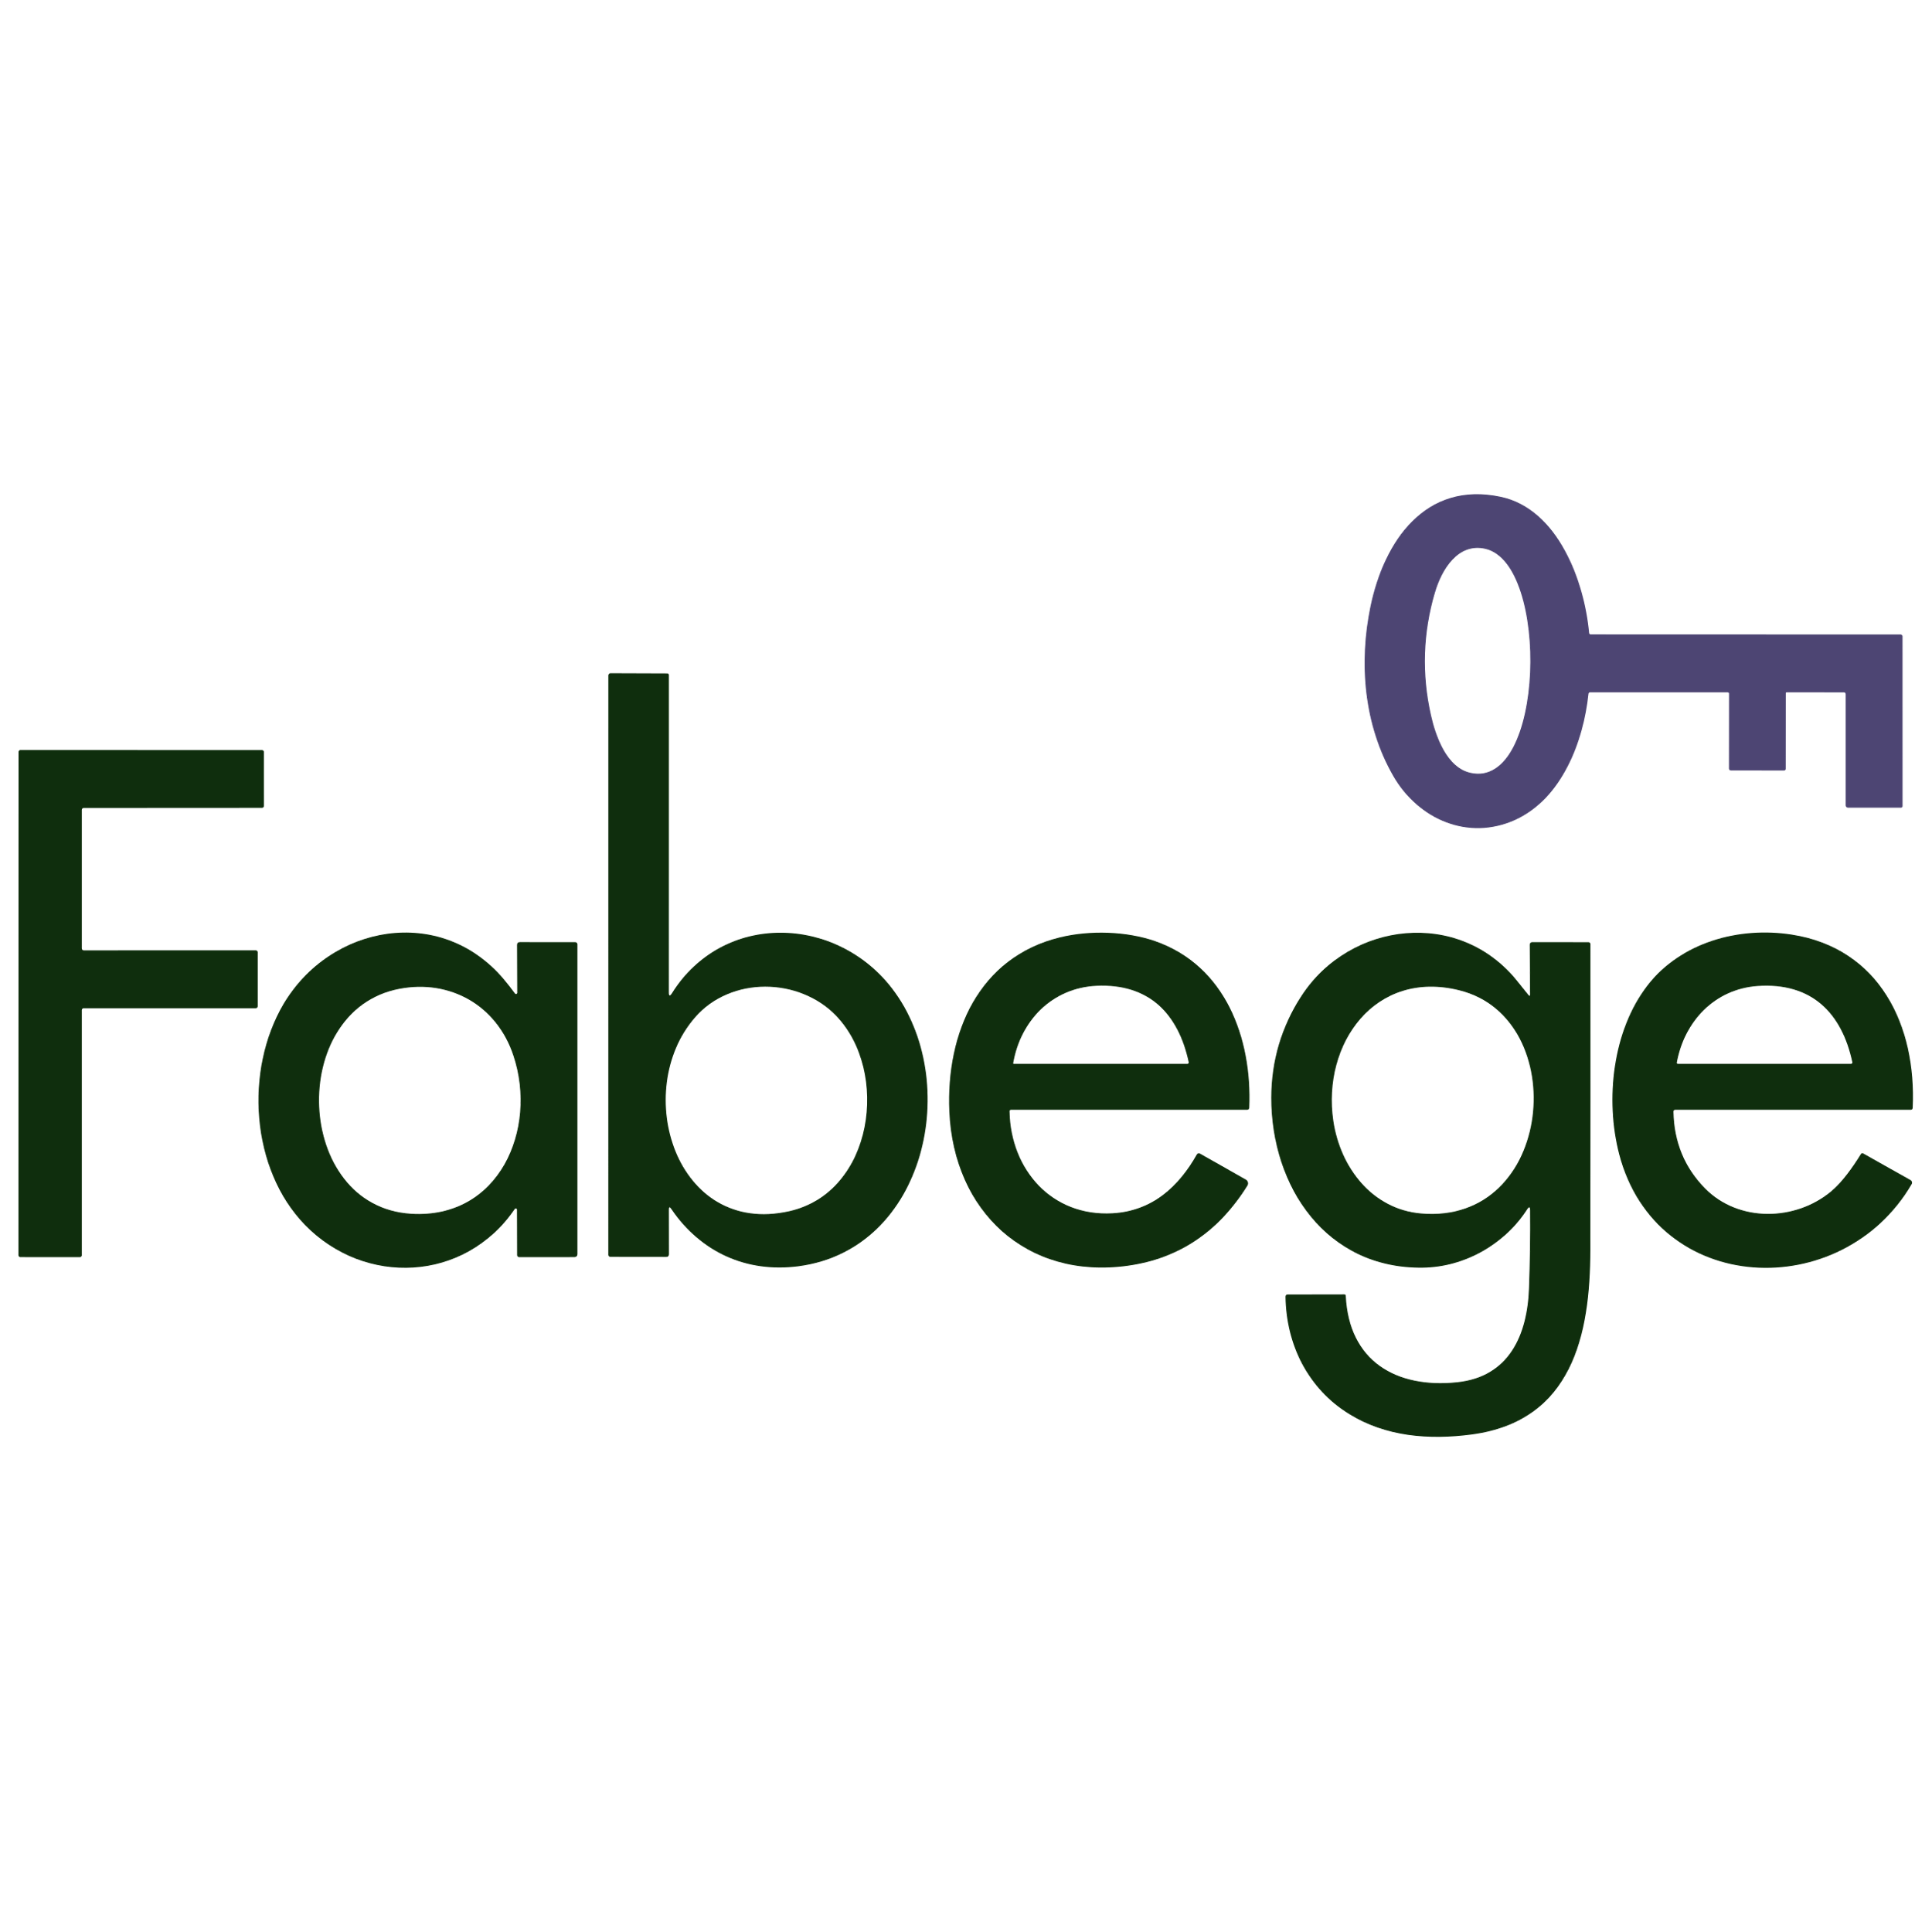 Fabege Logo Transparent Picture